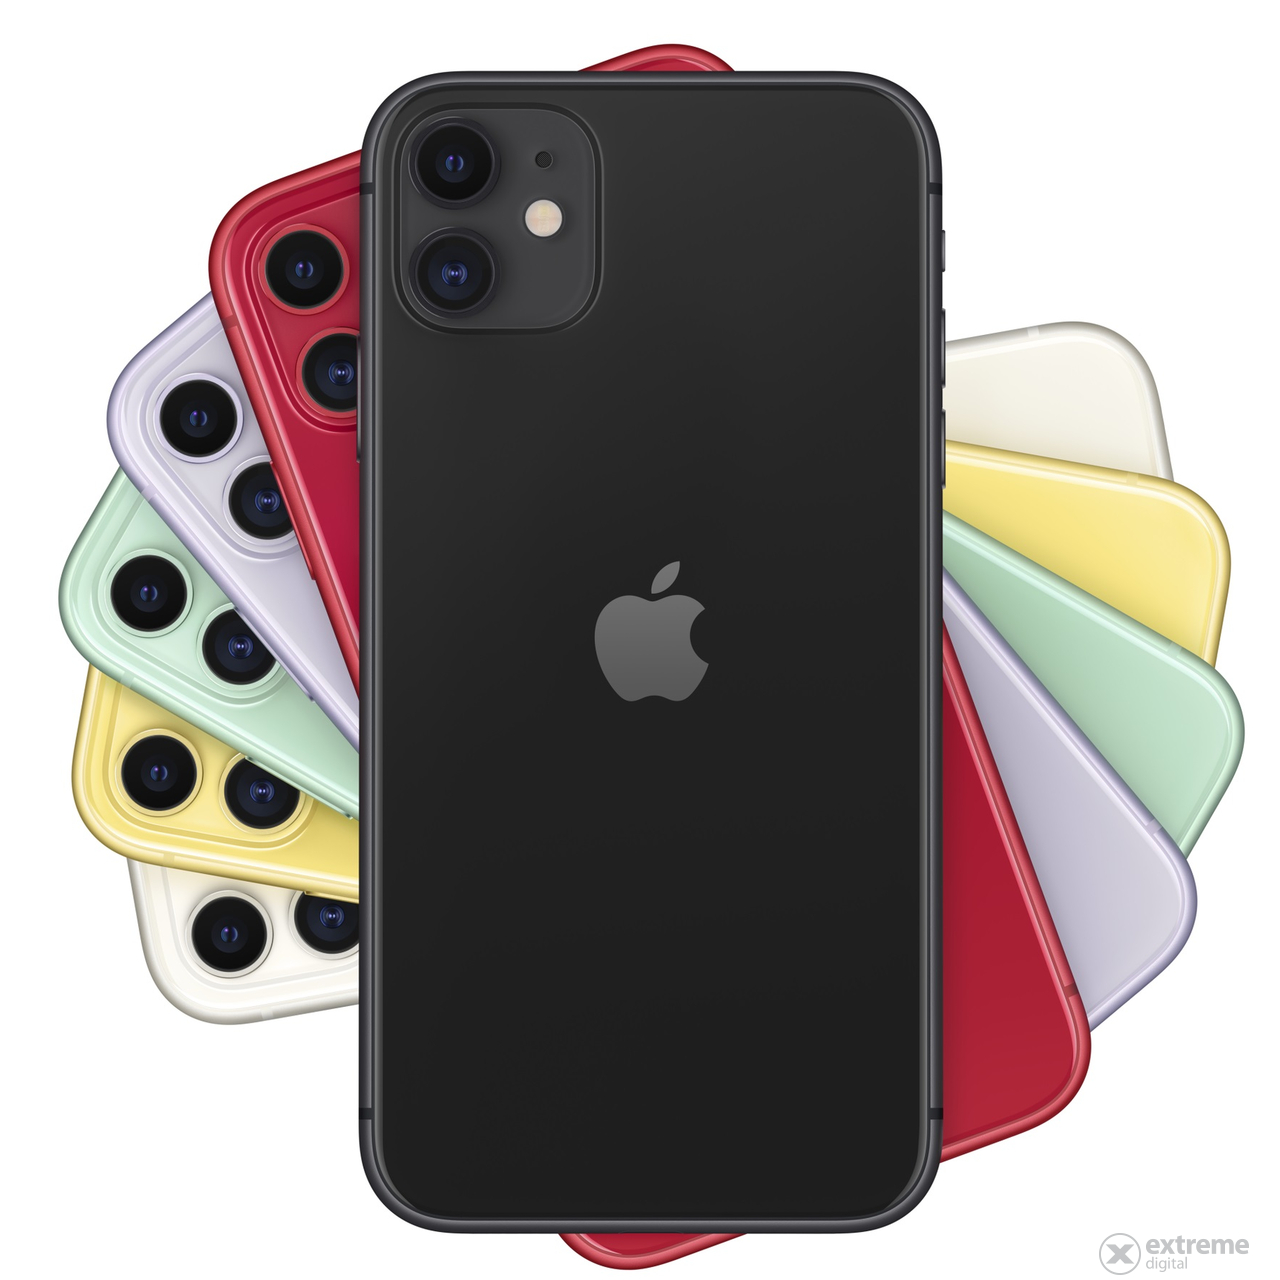 Apple iPhone 11 128GB smartphone